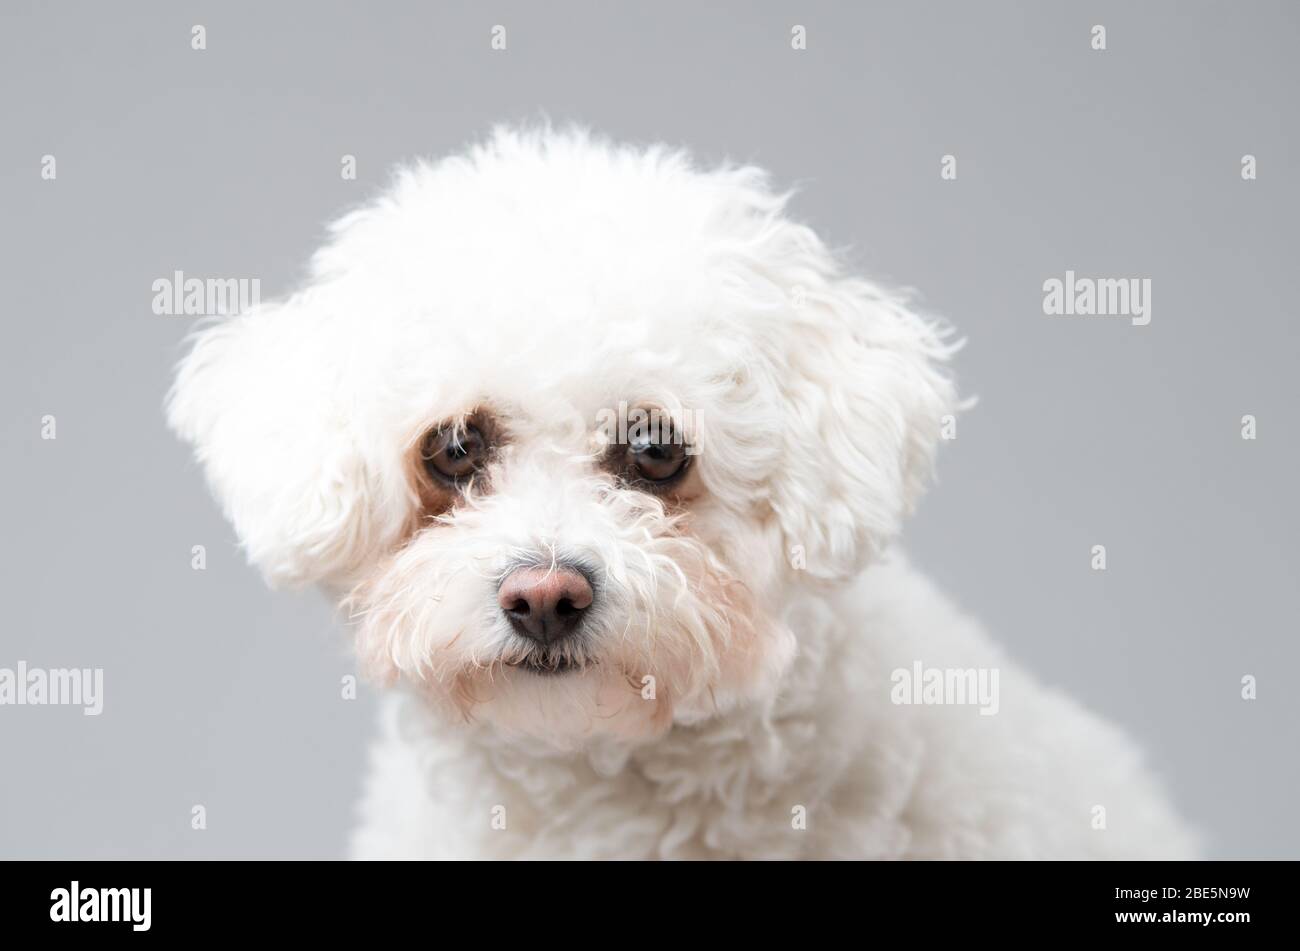 Small, cute, fluffy Bichon Frise Dog Stock Photo